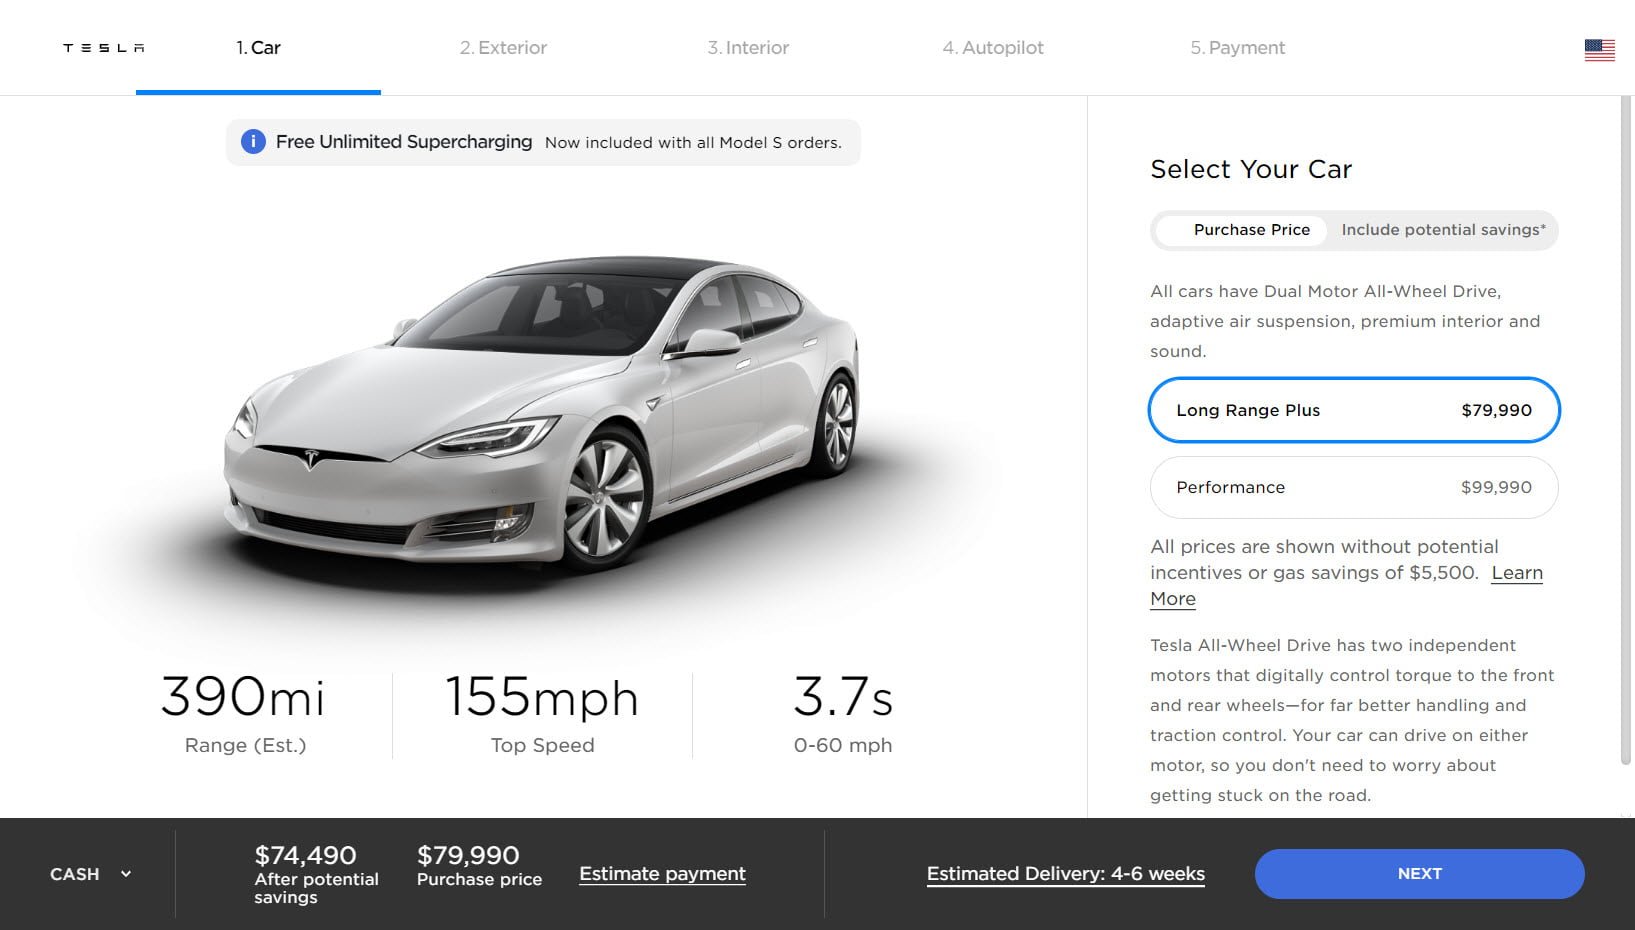 Tesla Increases Model S/X Range, Model S Now Up to 390/351 Miles